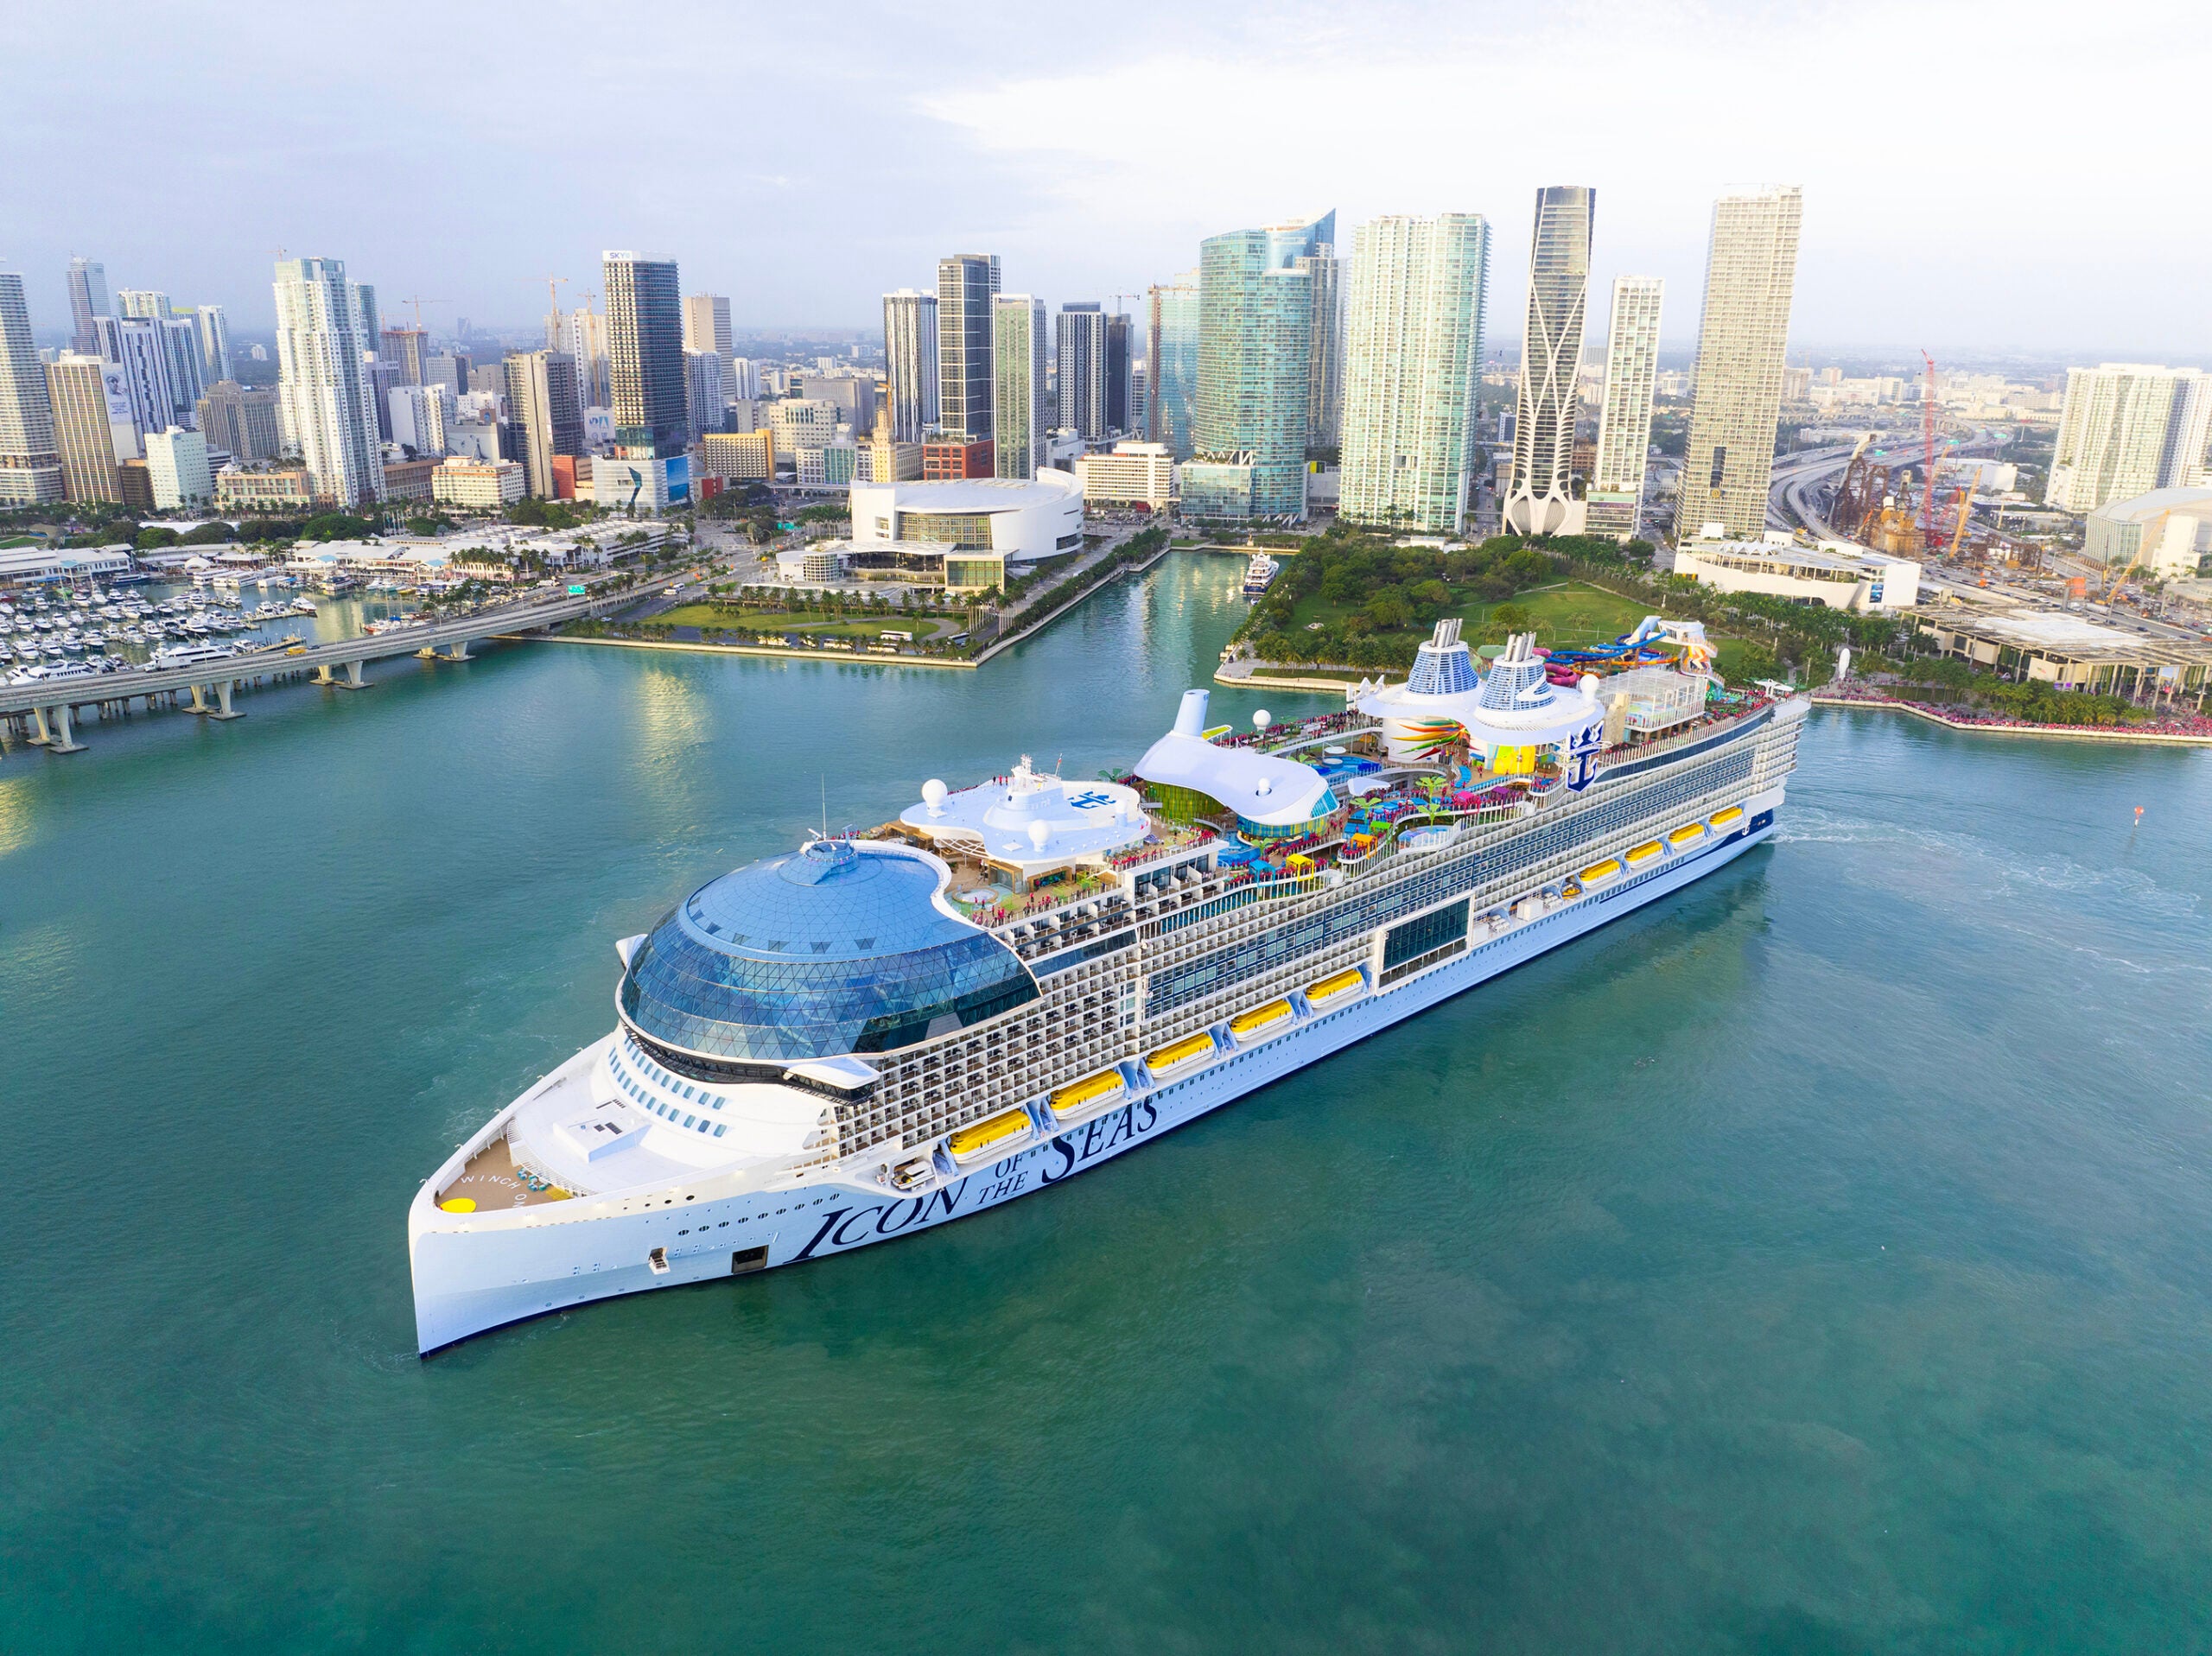 royal caribbean international's oasis class cruise ship